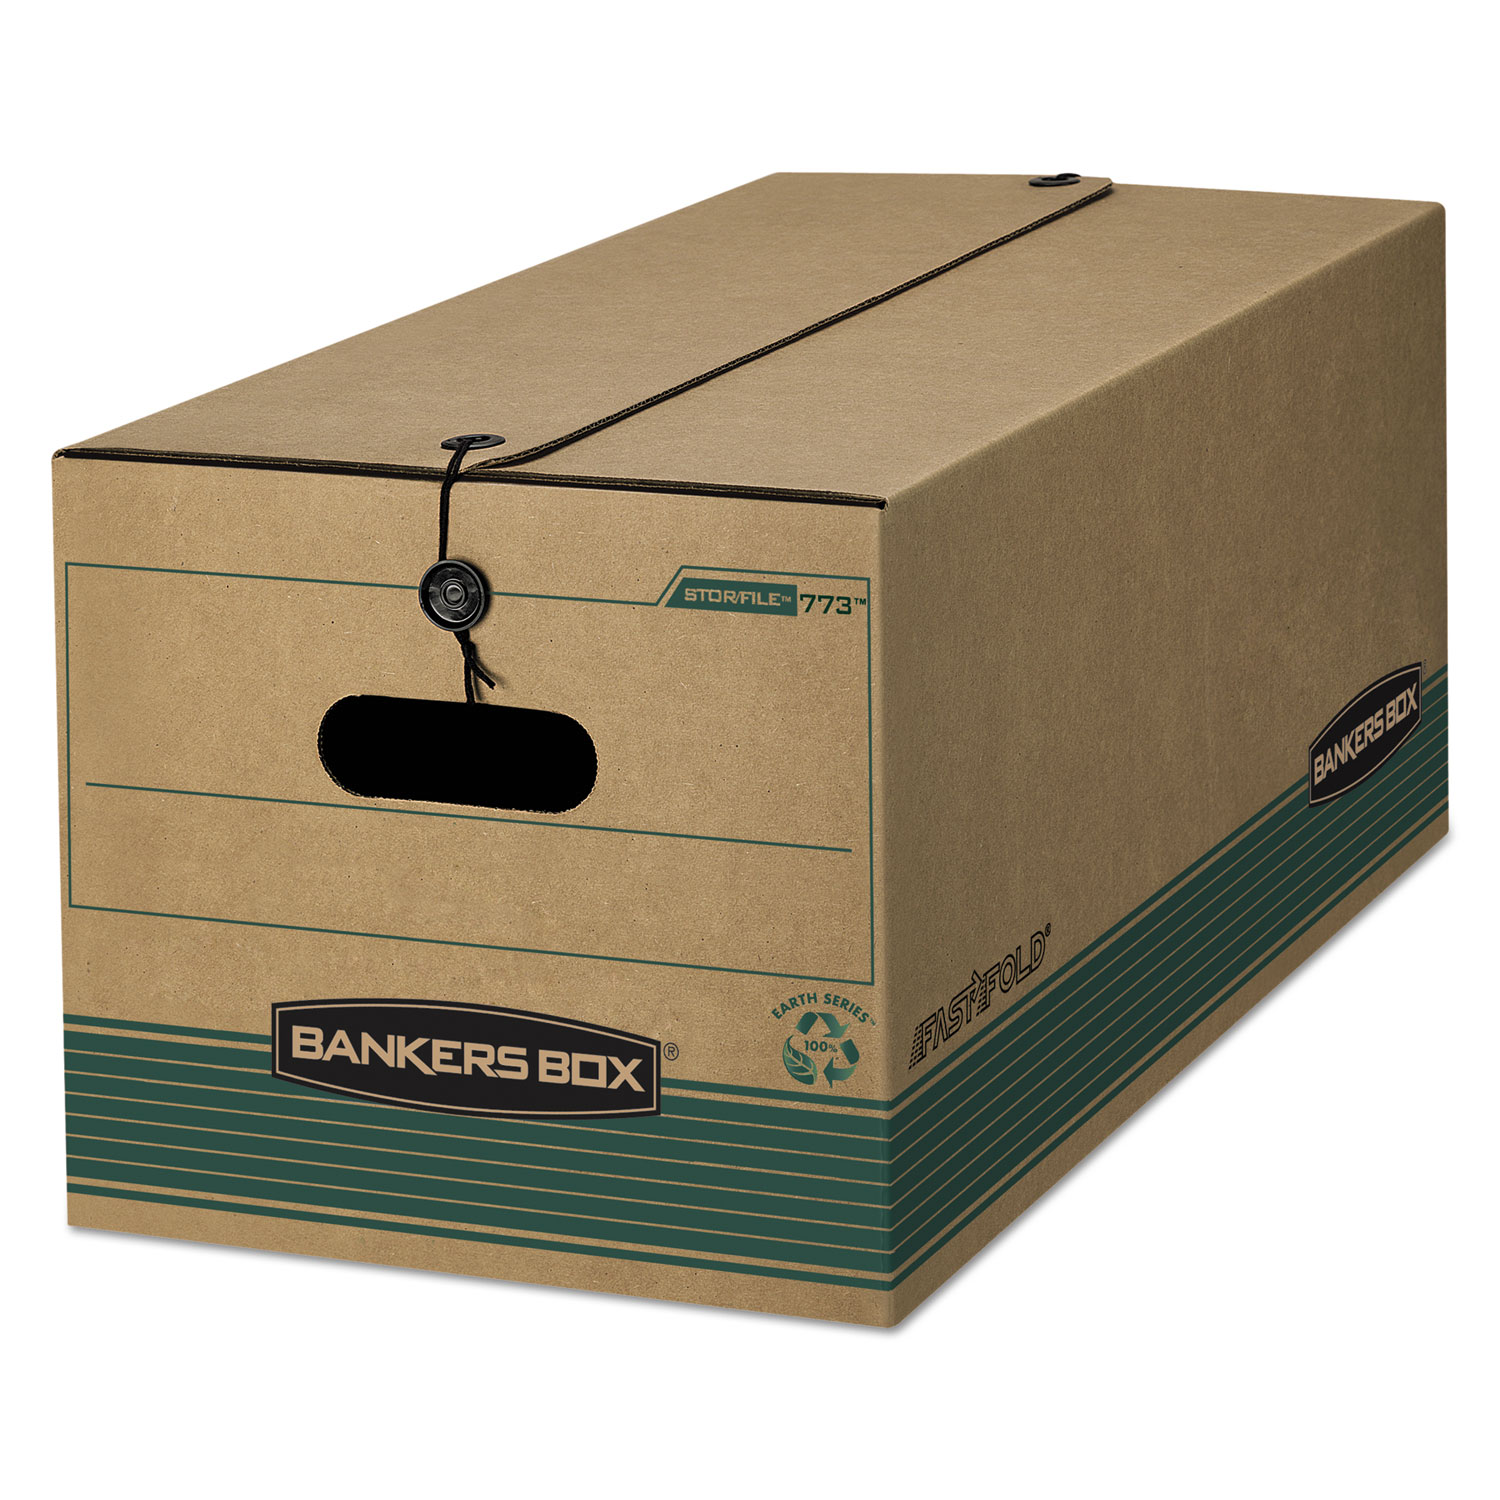  Bankers Box 00774 STOR/FILE Medium-Duty Strength Storage Boxes, Legal Files, 15.25 x 24.13 x 10.75, Kraft/Green, 12/Carton (FEL00774) 